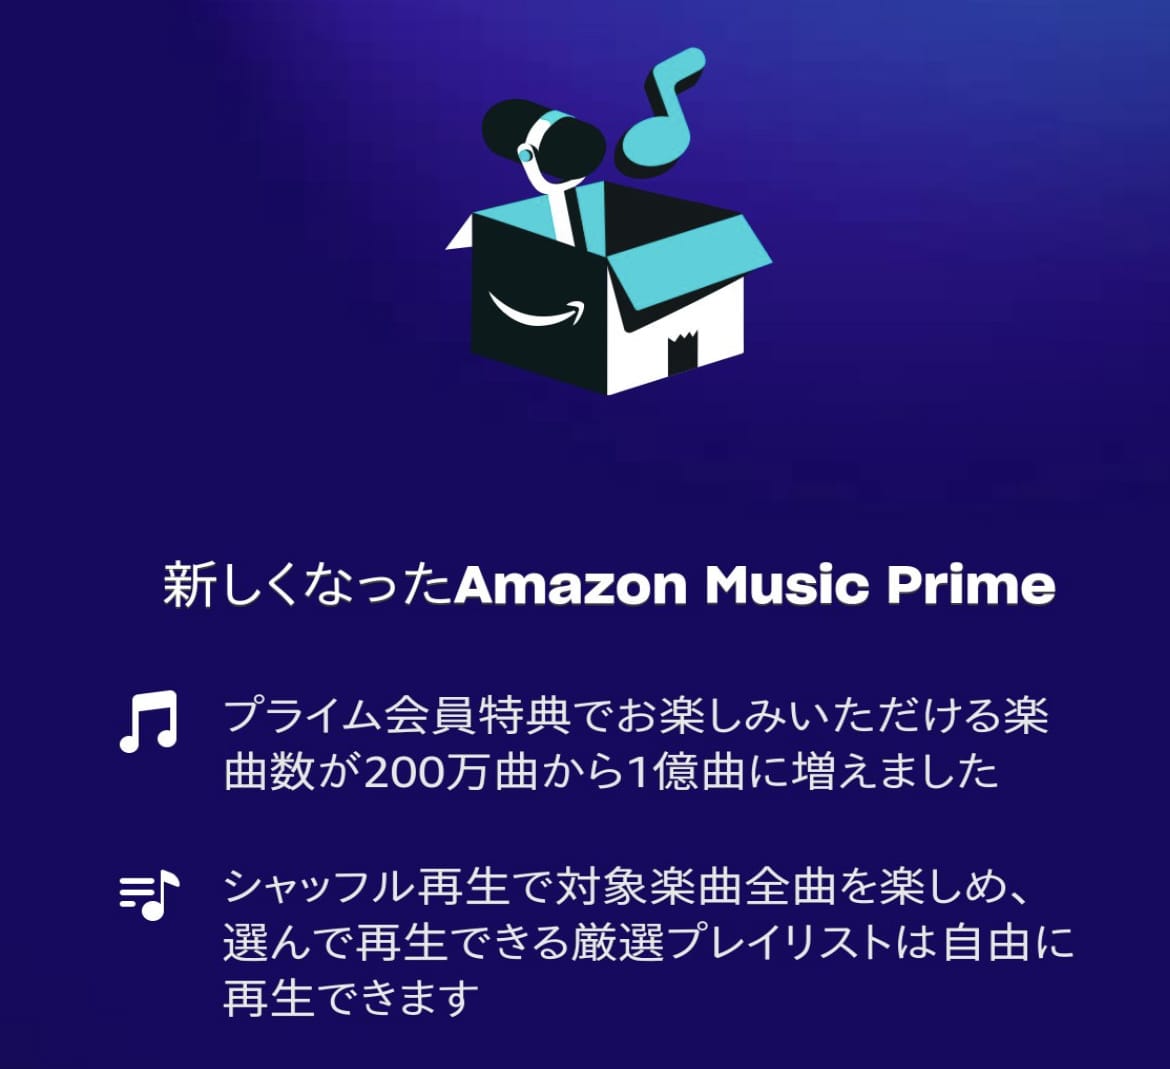 New AmazonMusic 04